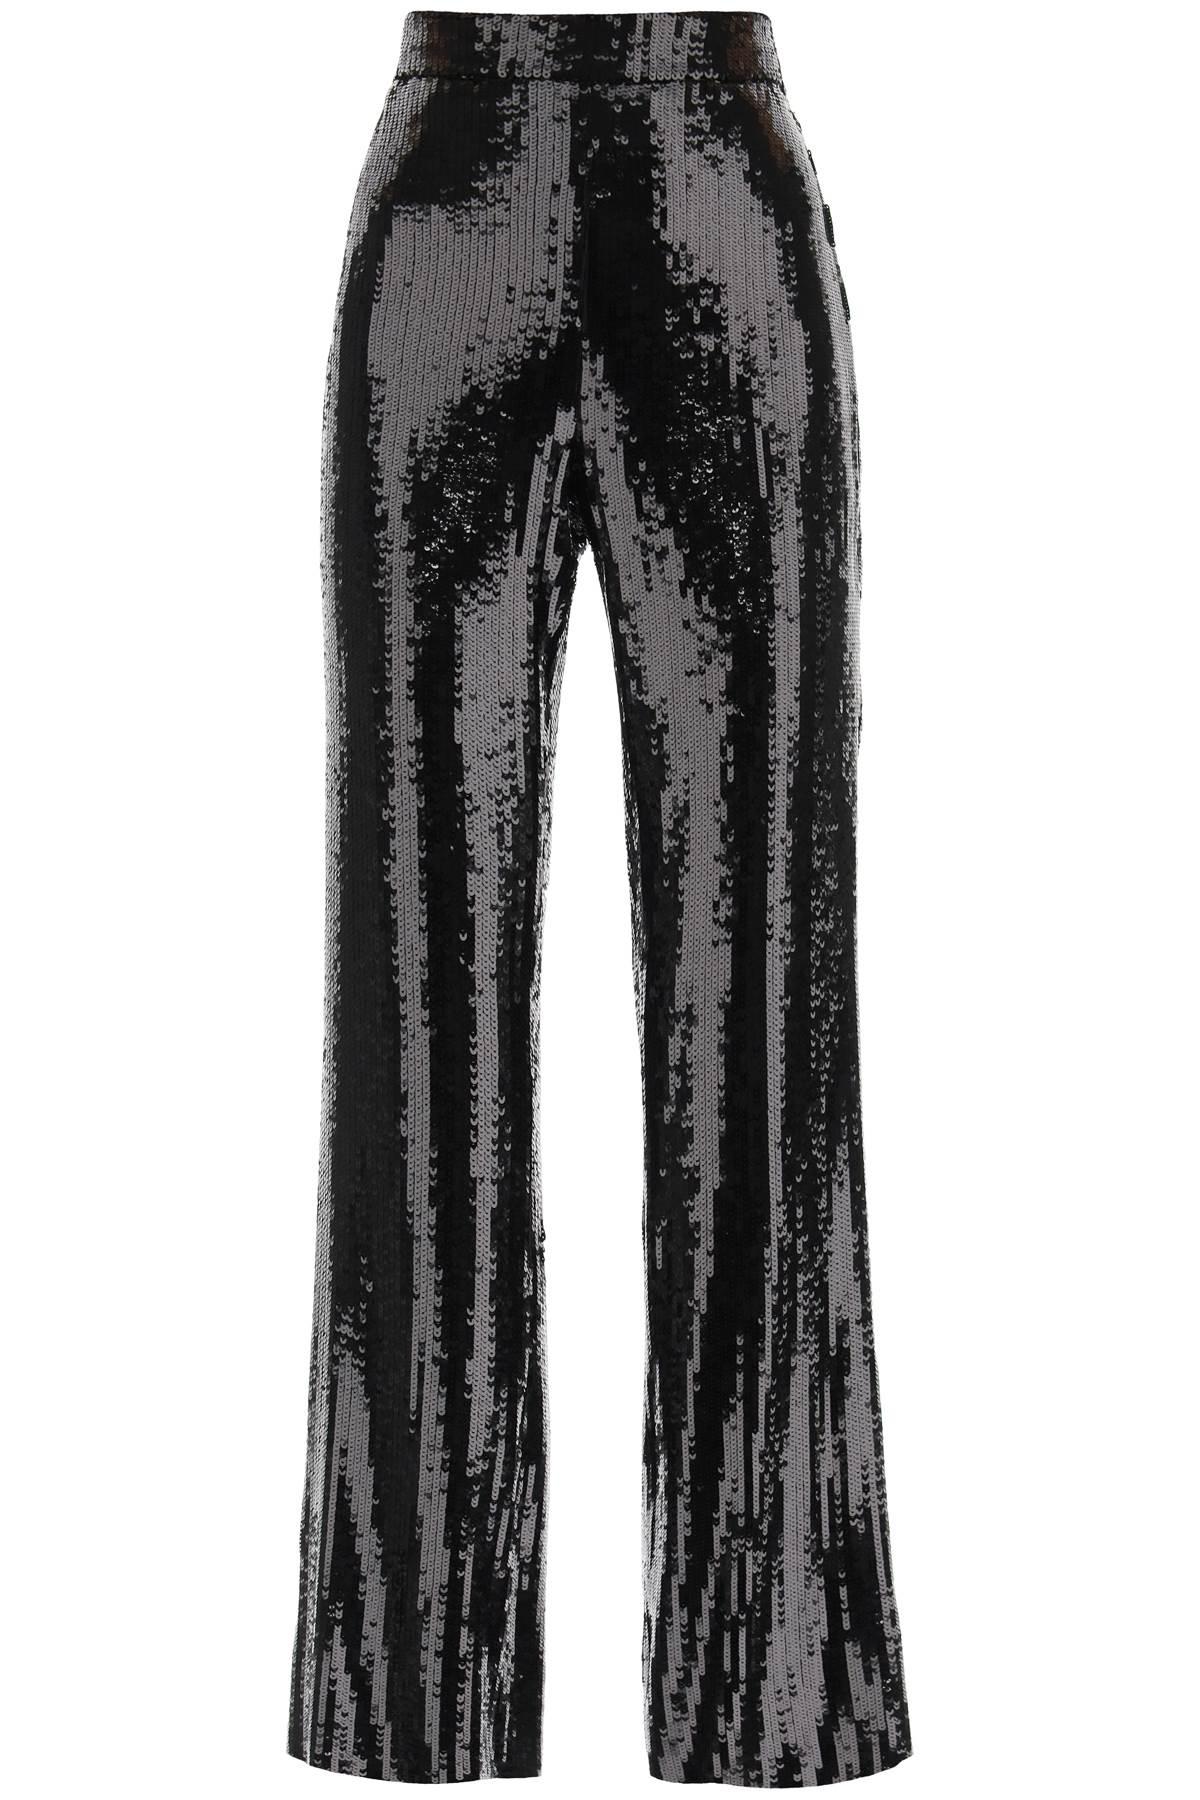 Max Mara Studio Synthetic 'papiri' Sequined Pants in Black | Lyst